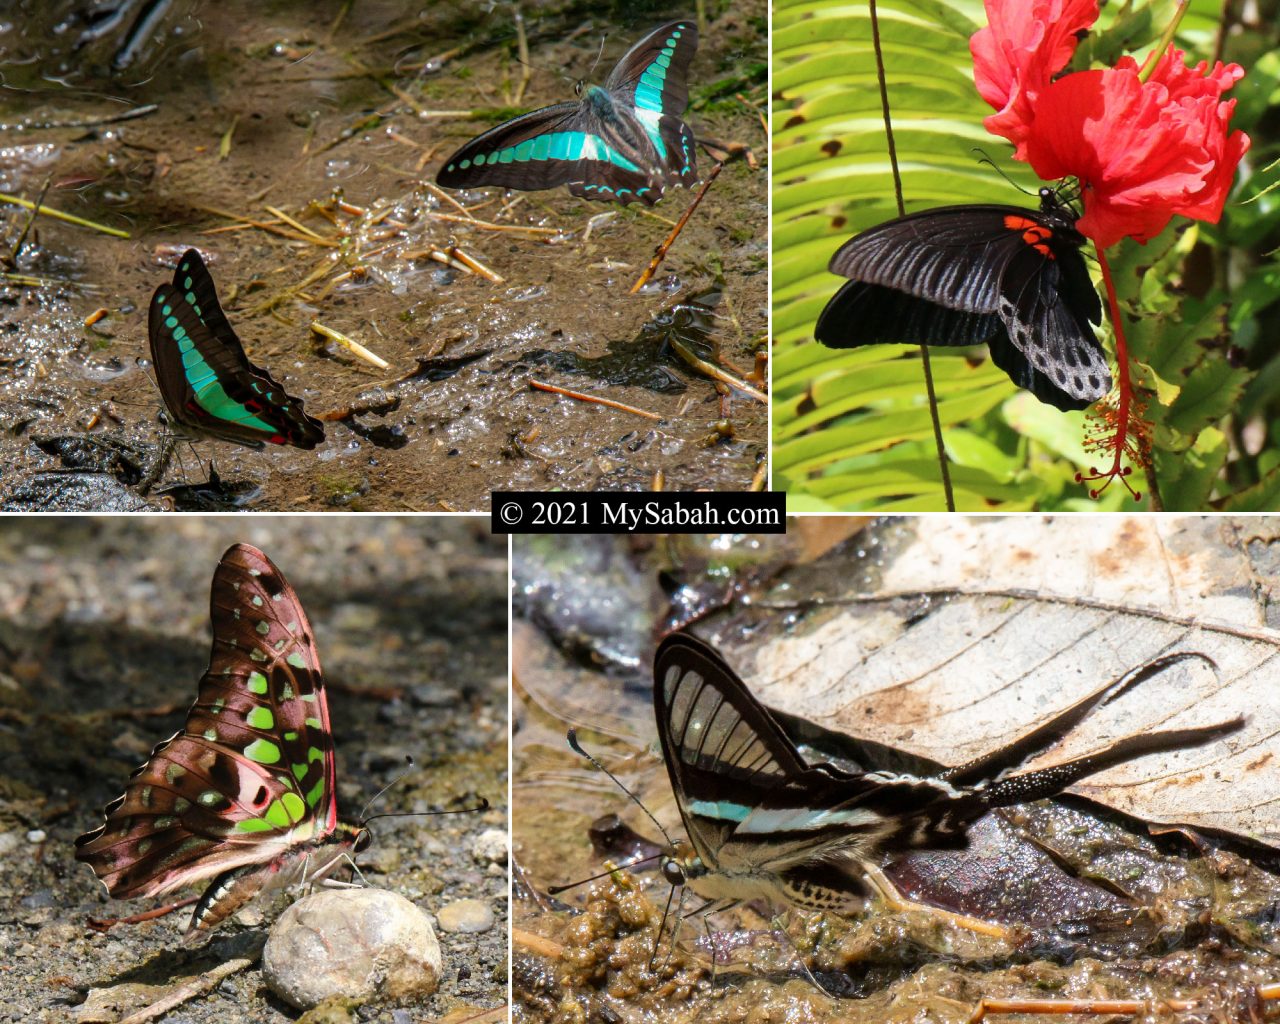 Butterflies of Sabah Borneo in Papilionidae family. Top left: Common Bluebottle (Graphium sarpedon), Top right: The Great Mormon (female) (Menelaides memnon memnon), Bottom left: Tailed Jay (Graphium agamemnon agamemnon), Bottom right: Green Dragontail (Lamproptera meges meges)